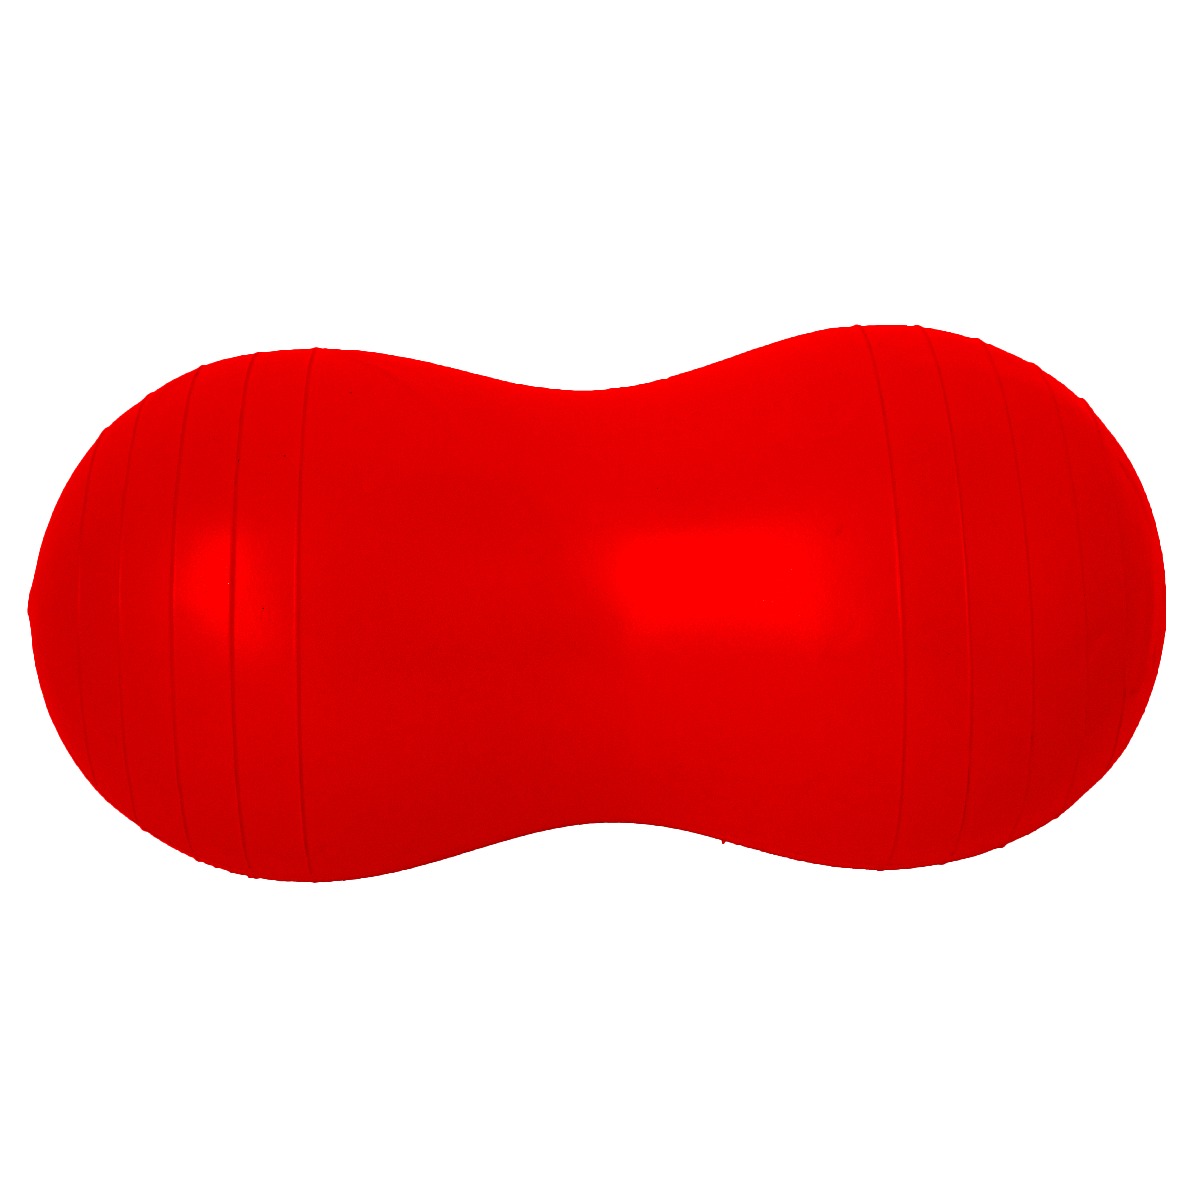 Large Red Peanut Ball